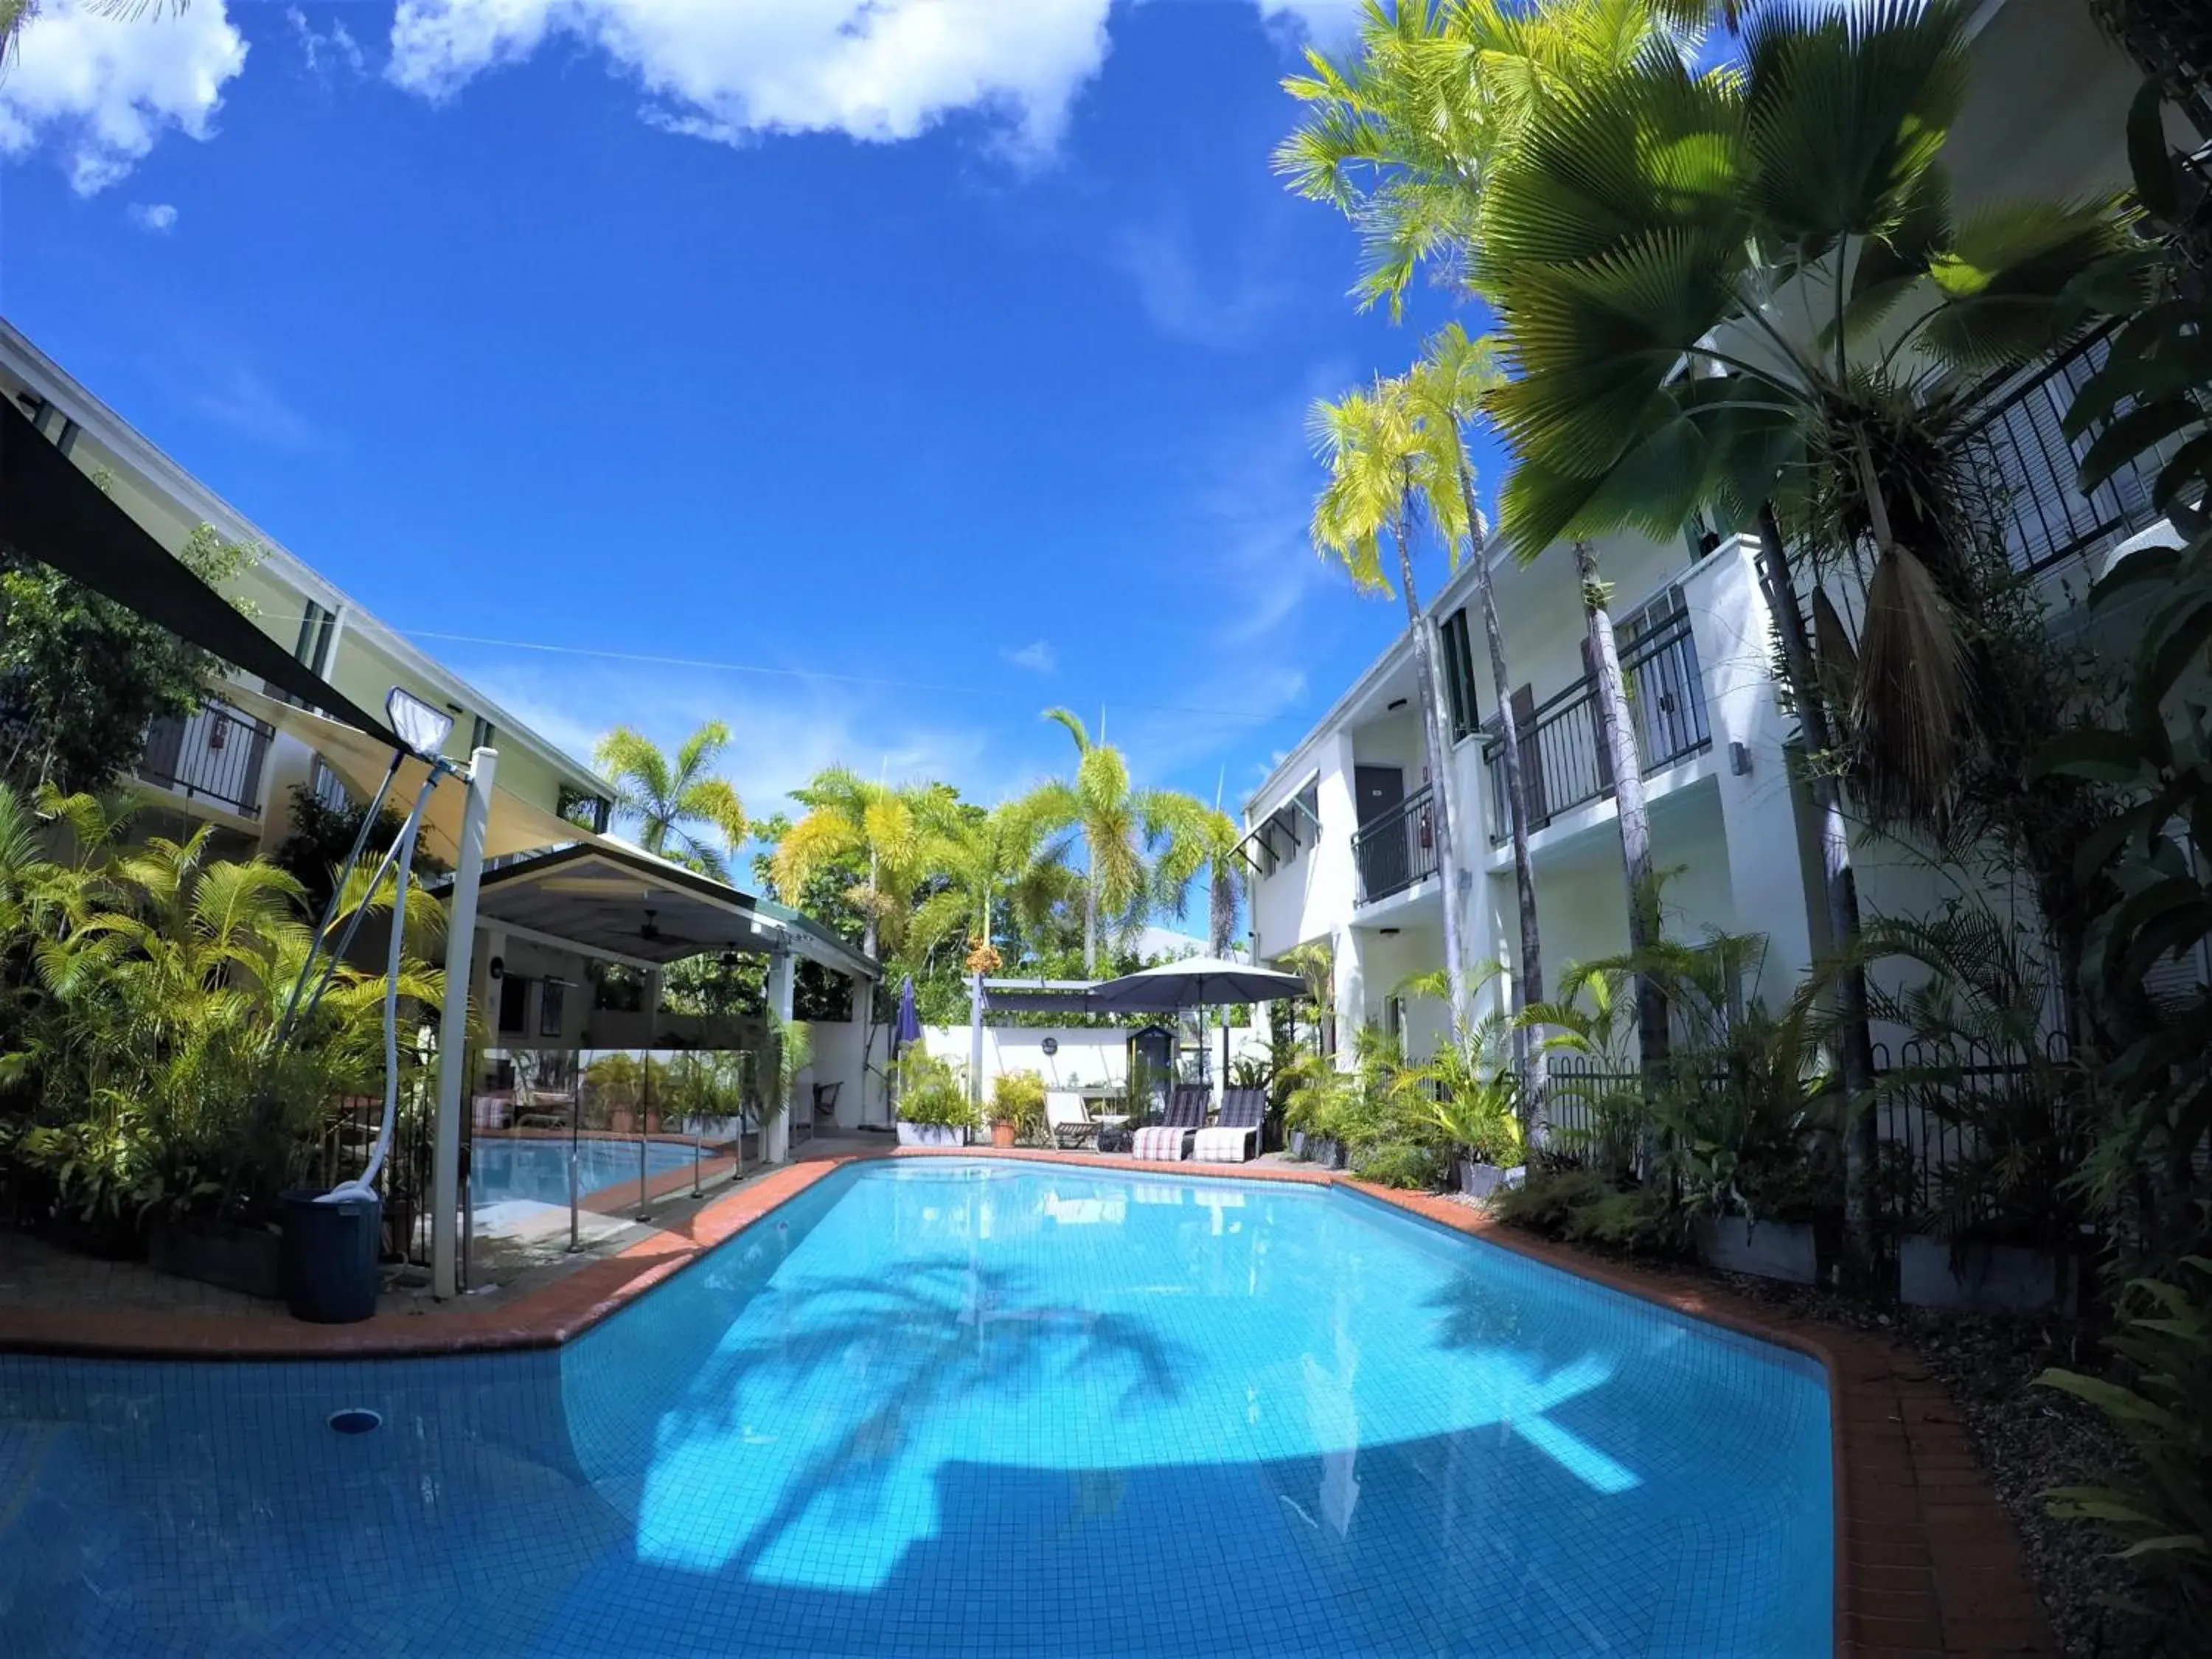 Swimming Pool in Crystal Garden Resort & Restaurant